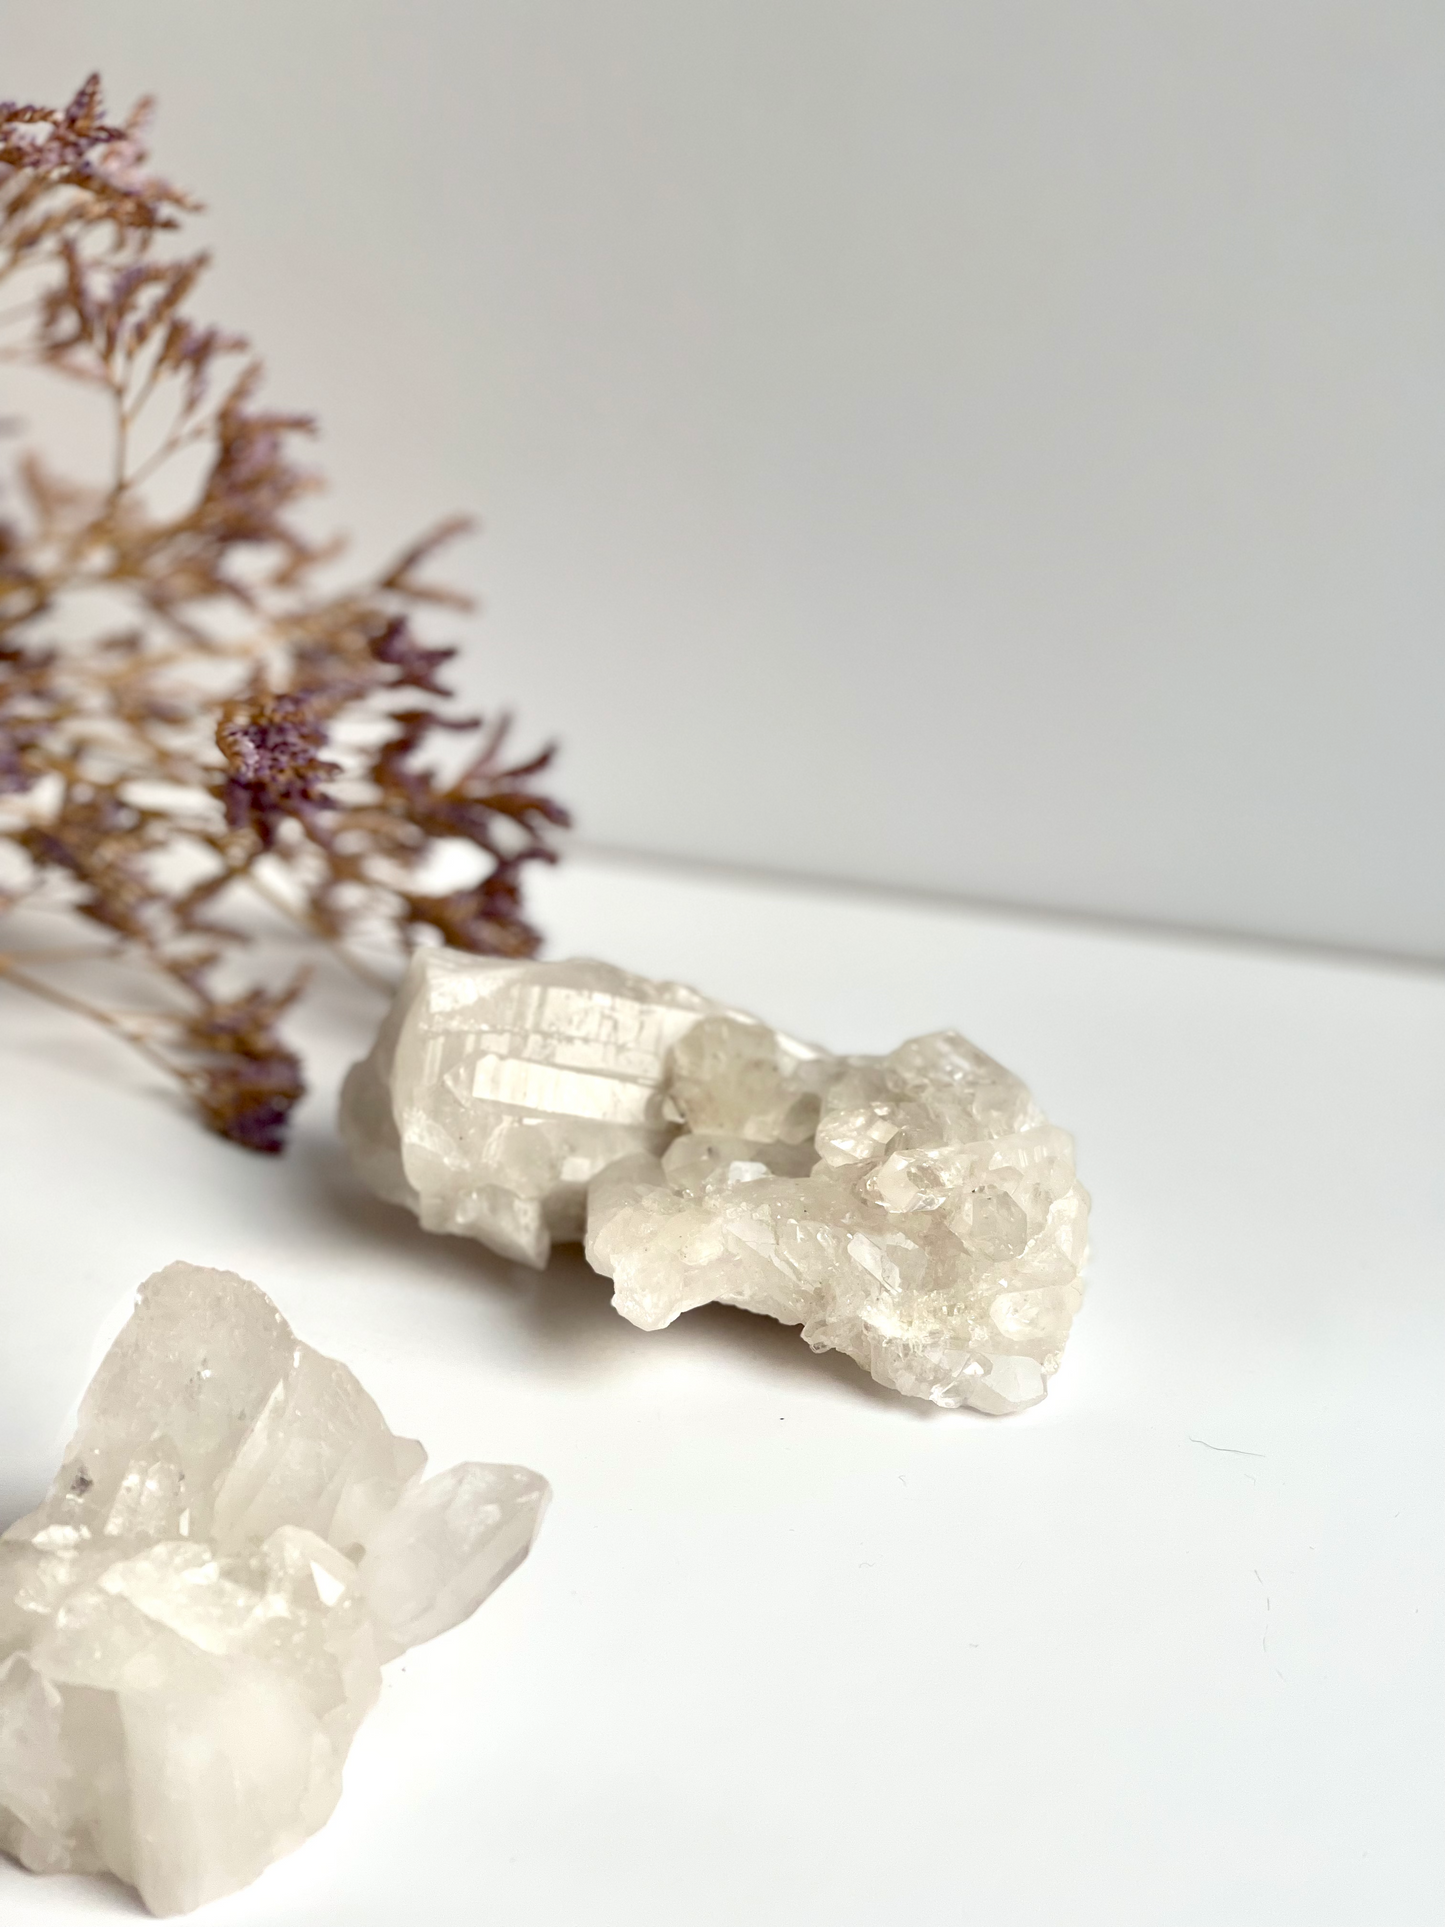 Druze cristal de roche